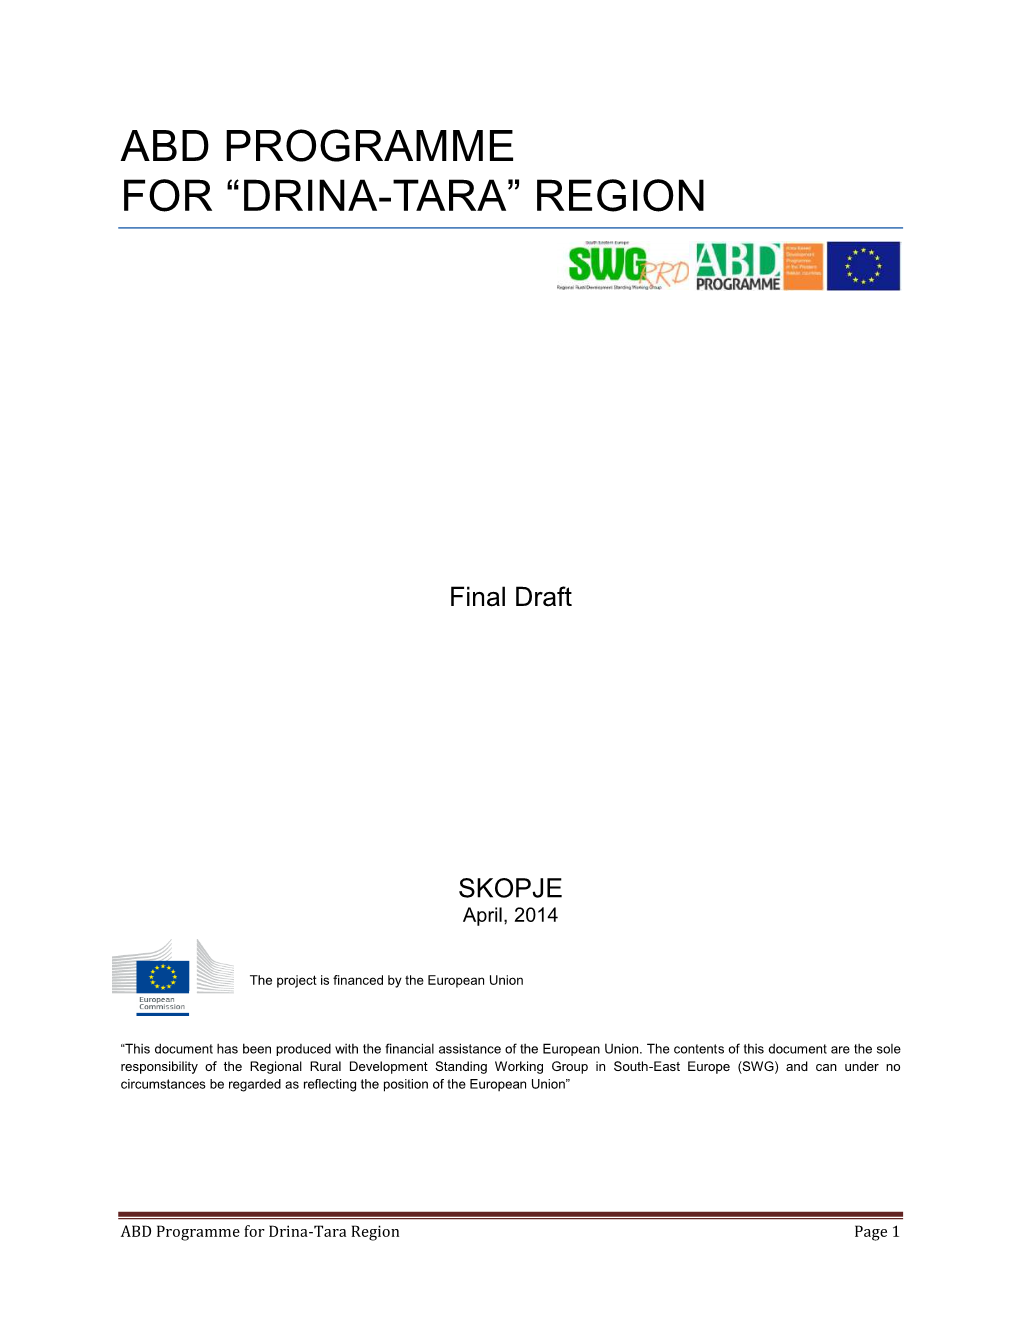 736 KB ABD Programme for Drina-Tara Region